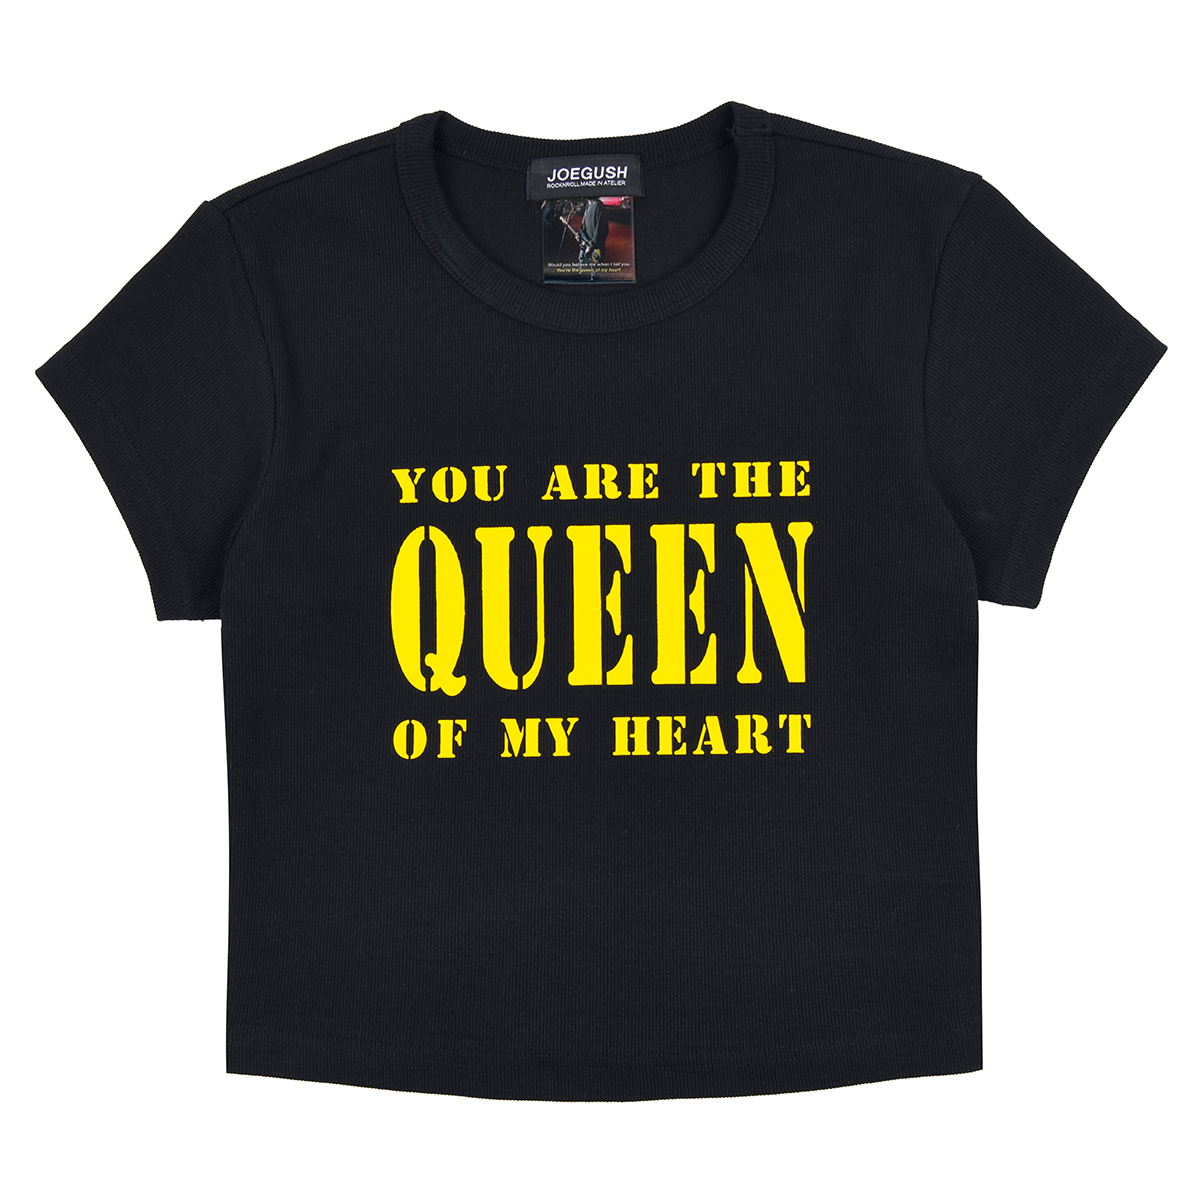 Queen Lyrics T-shirt (New Crop Ver.) (Black)